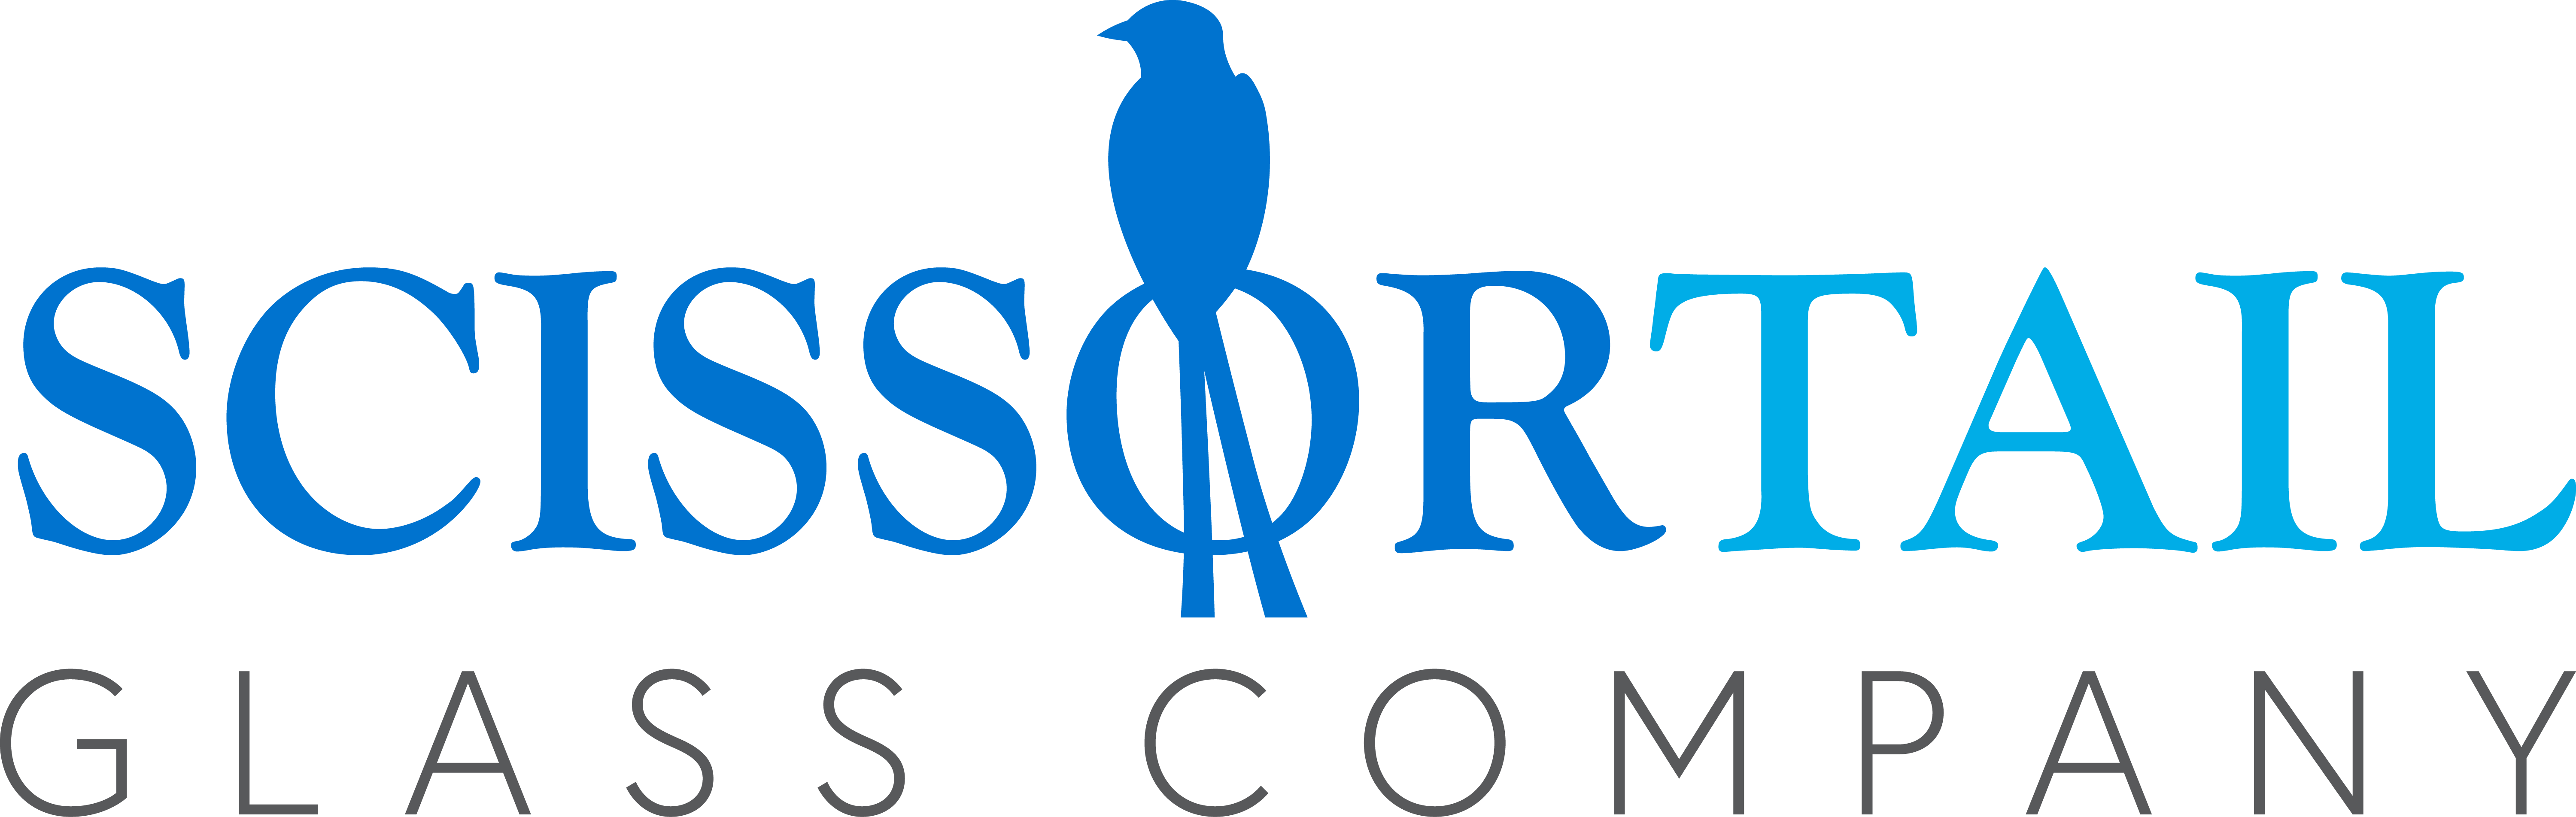 Scissortail Logo